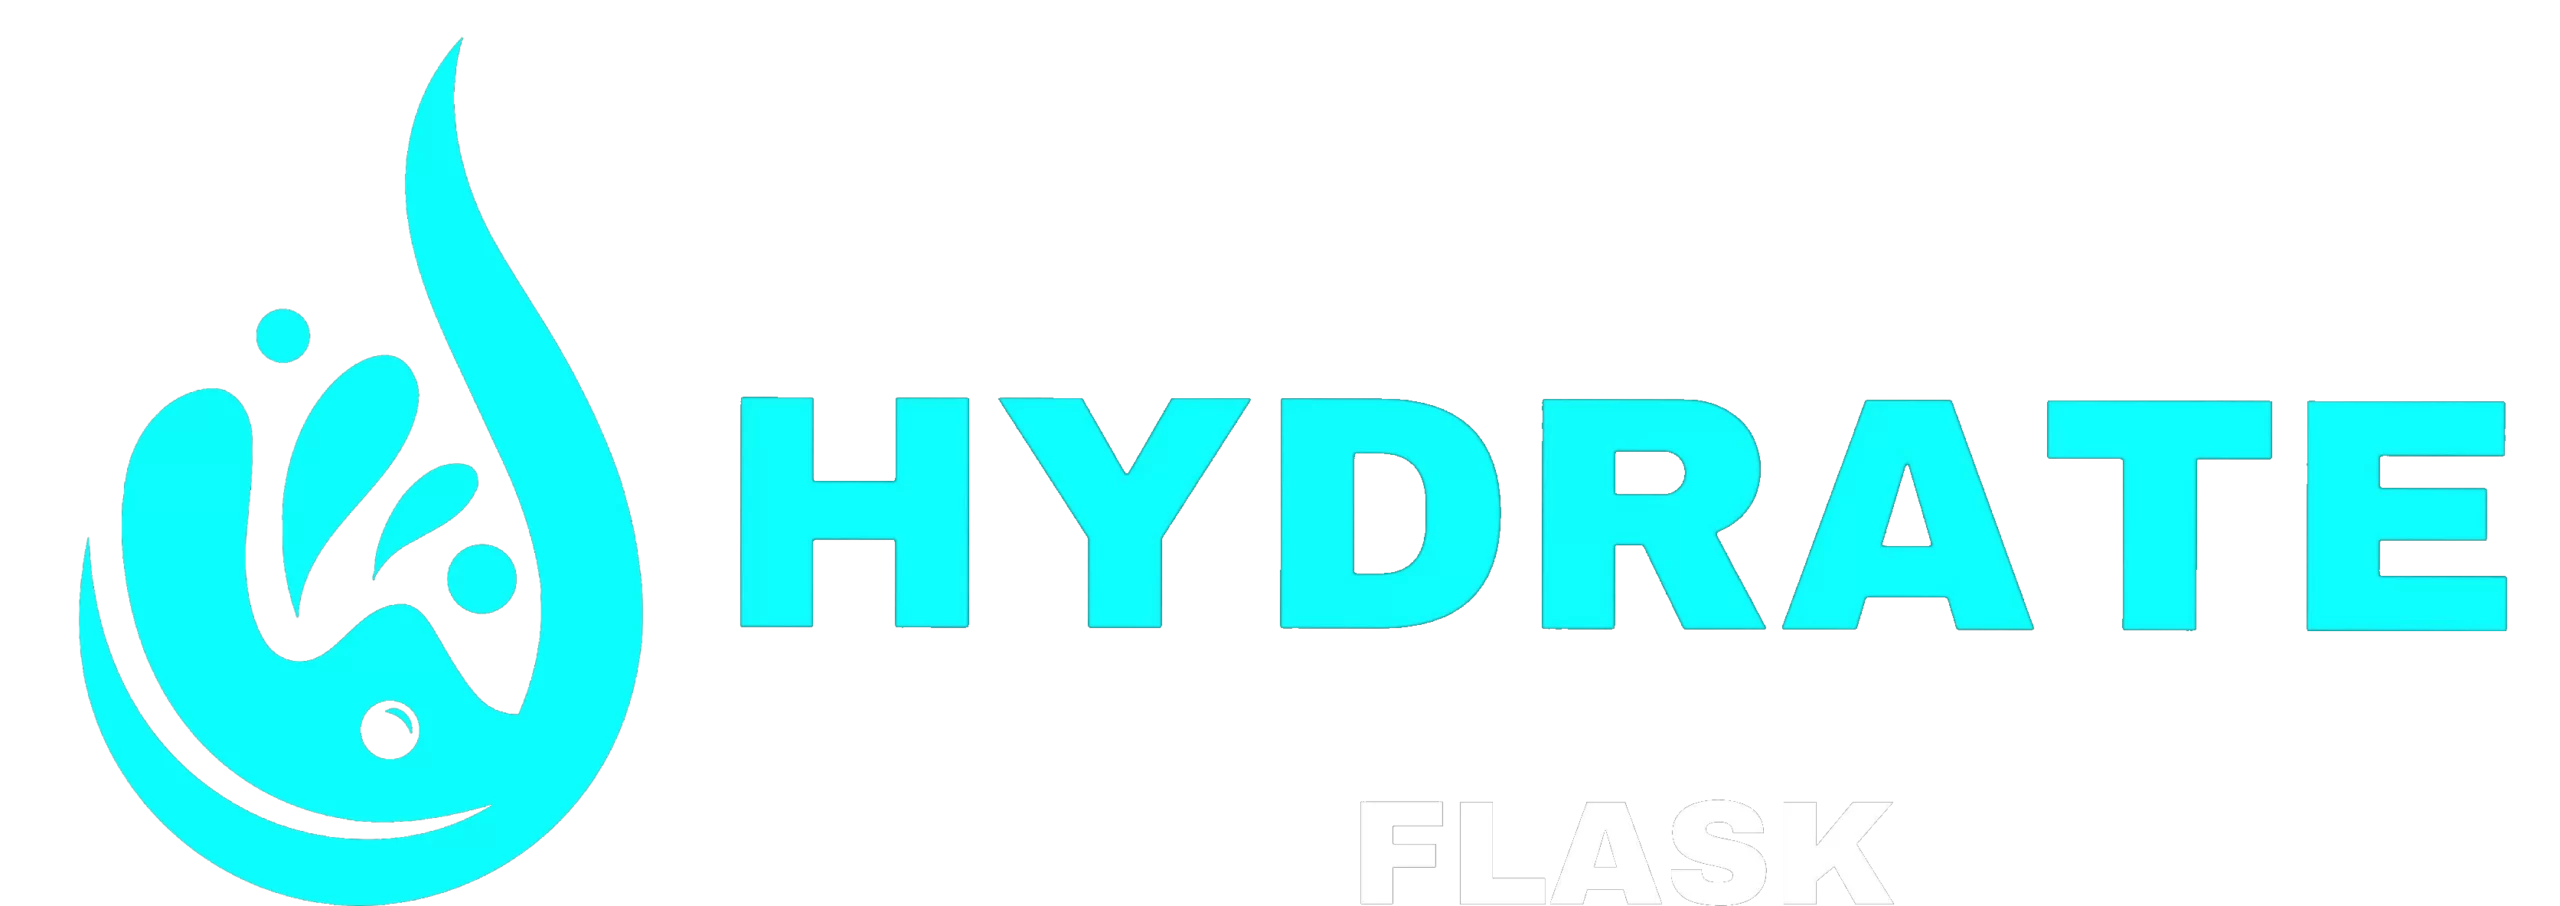 Hydrate Flask